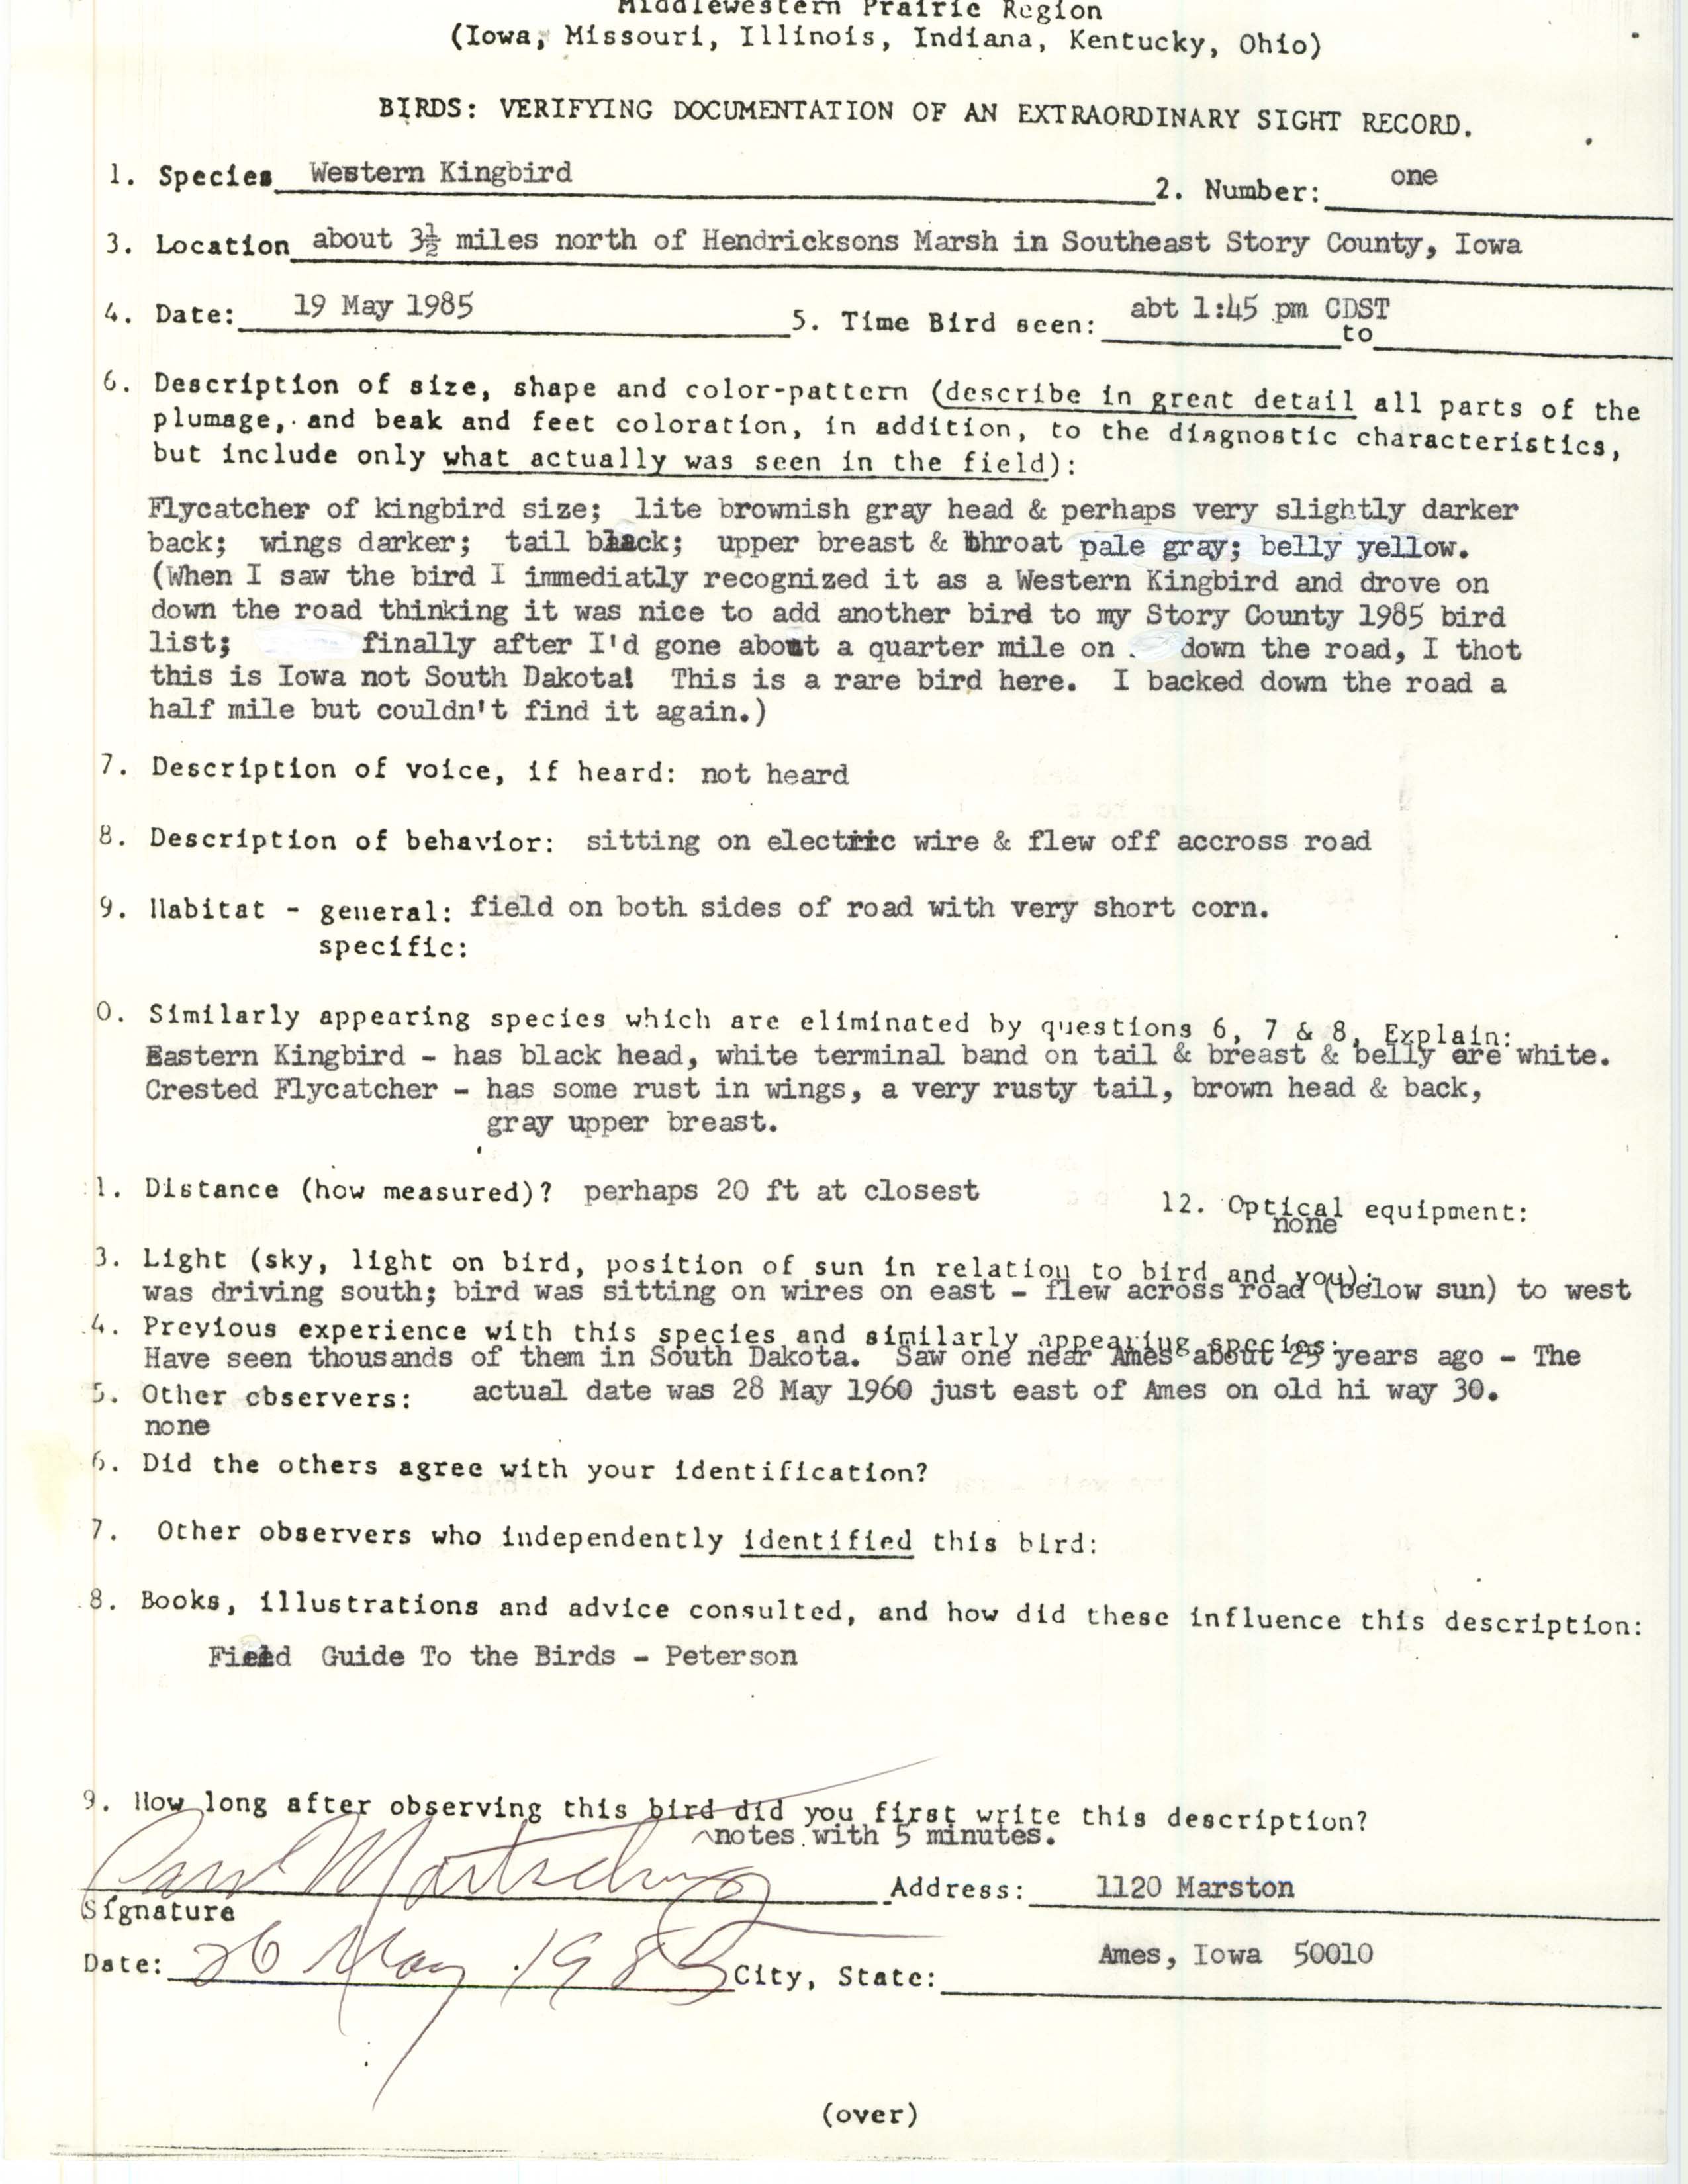 Rare bird documentation form for Western Kingbird north of Hendrickson Marsh, 1984